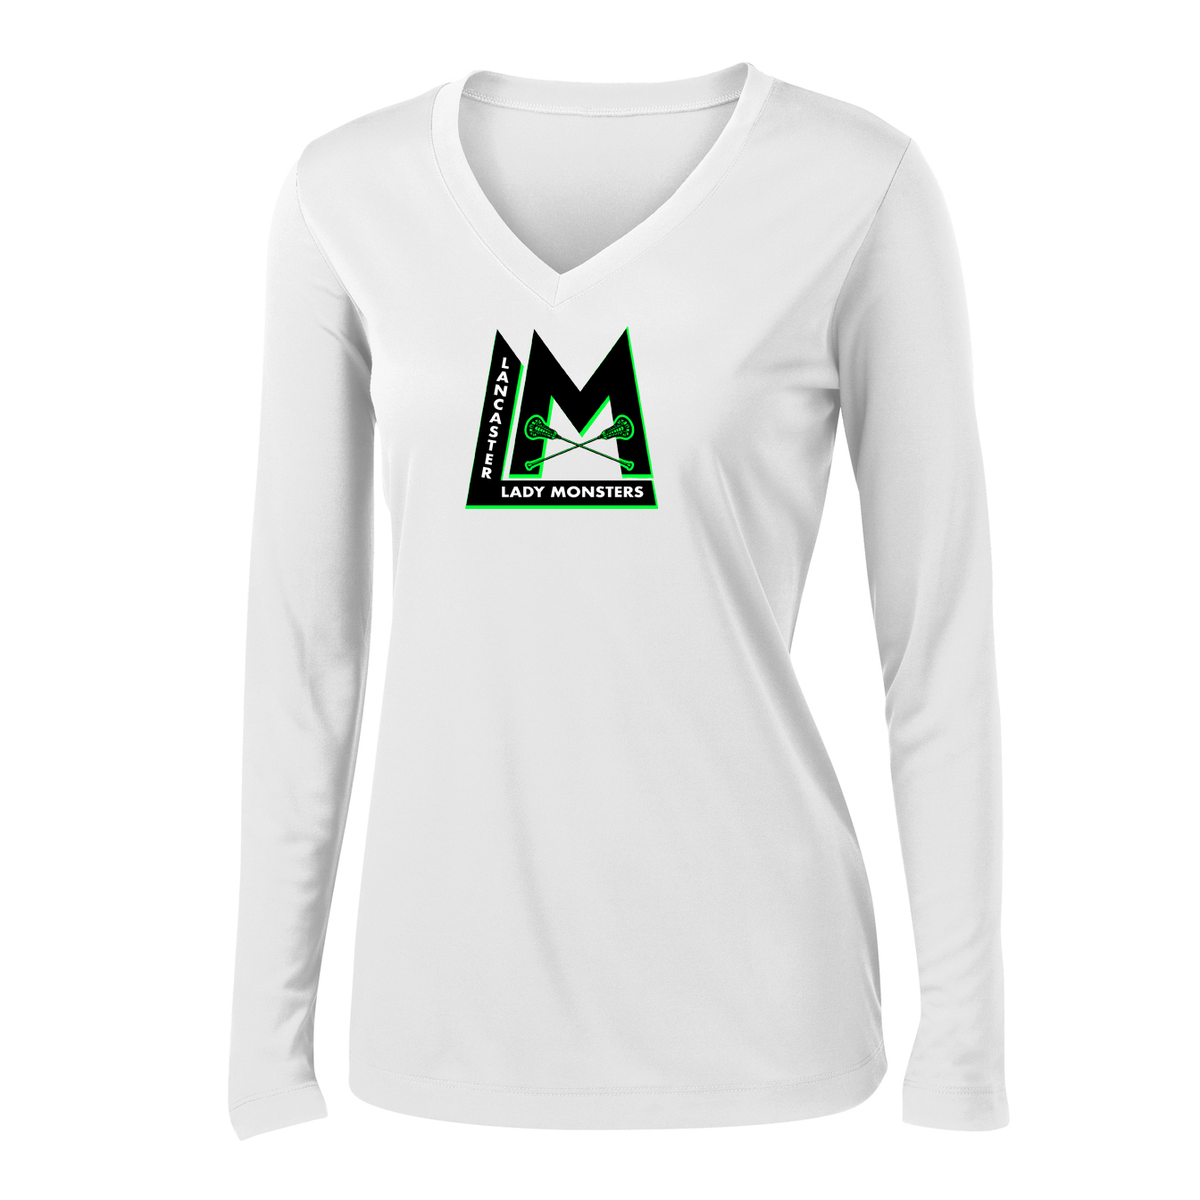 Lady Monsters Lacrosse Women's Long Sleeve Performance Shirt